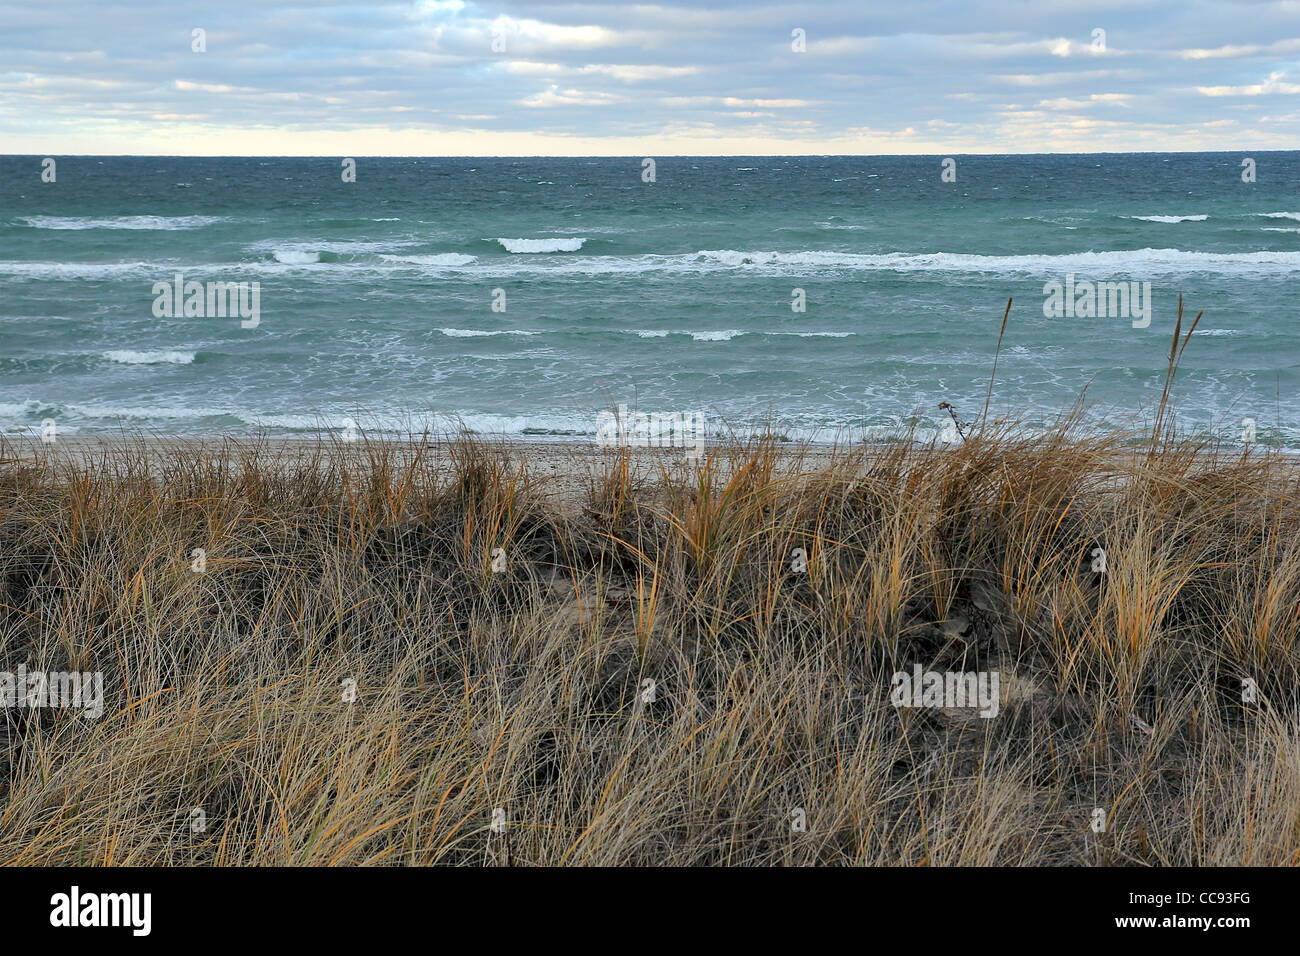 Looking over beach grass towards the ocean in December. Stock Photo